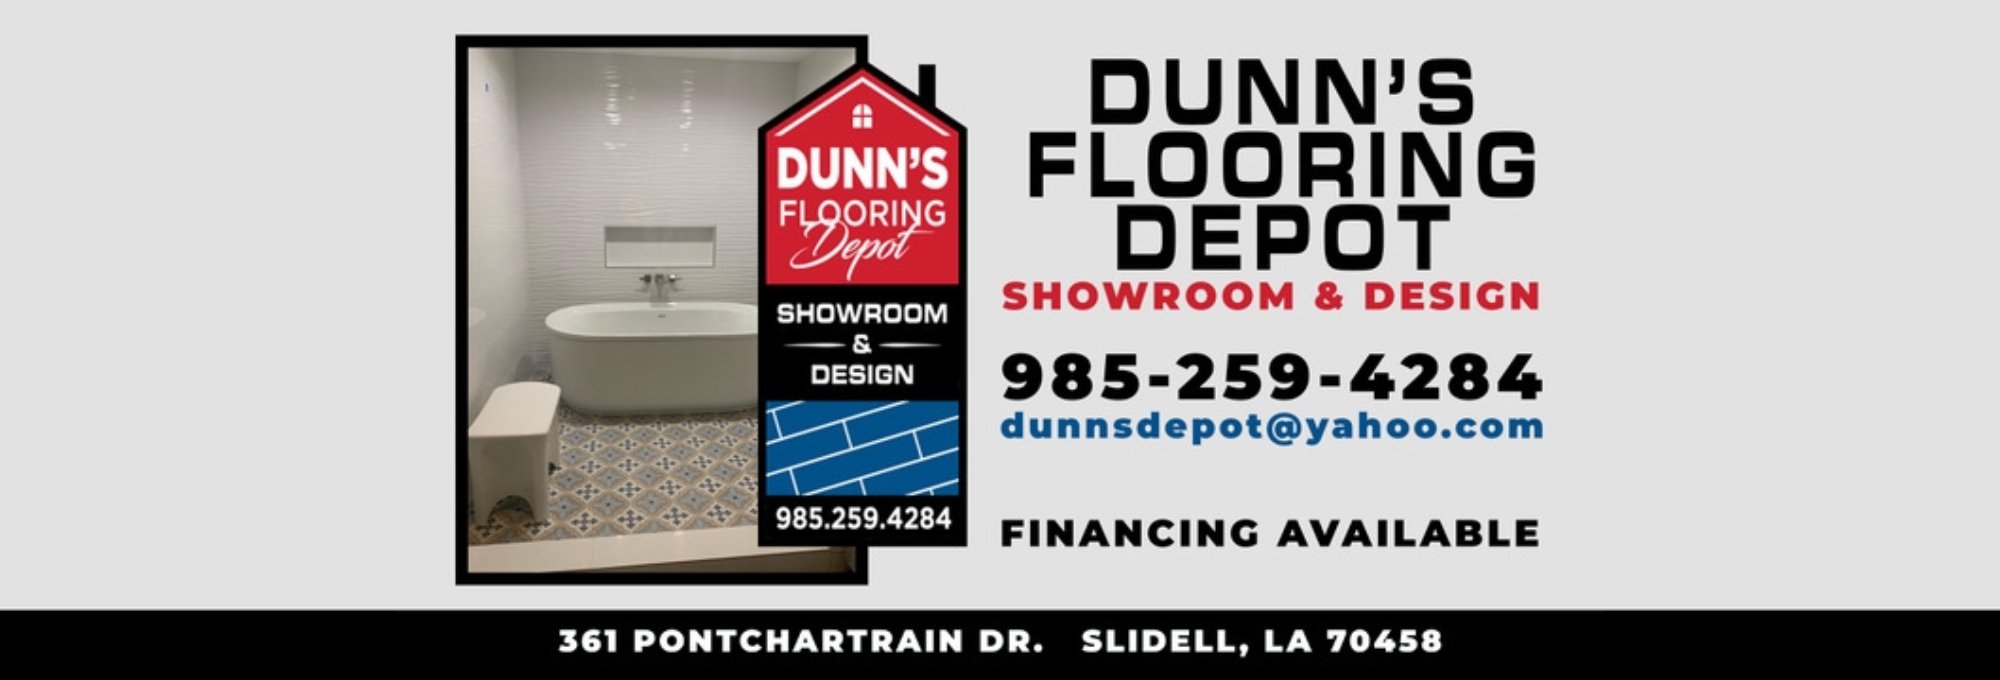 Dunn's Flooring Depot & Showroom Ad